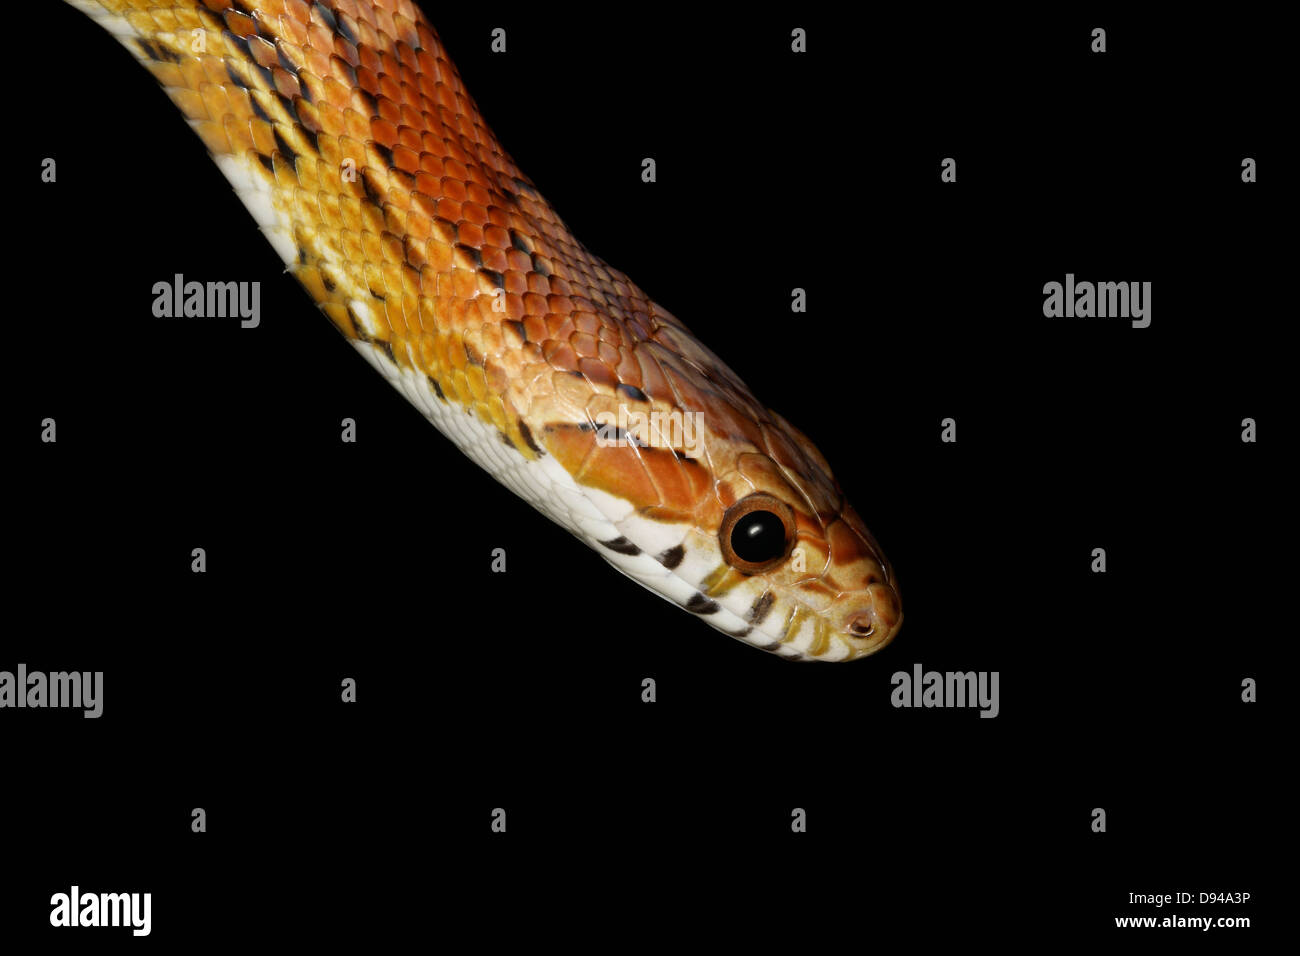 A snake, close-up. Stock Photo